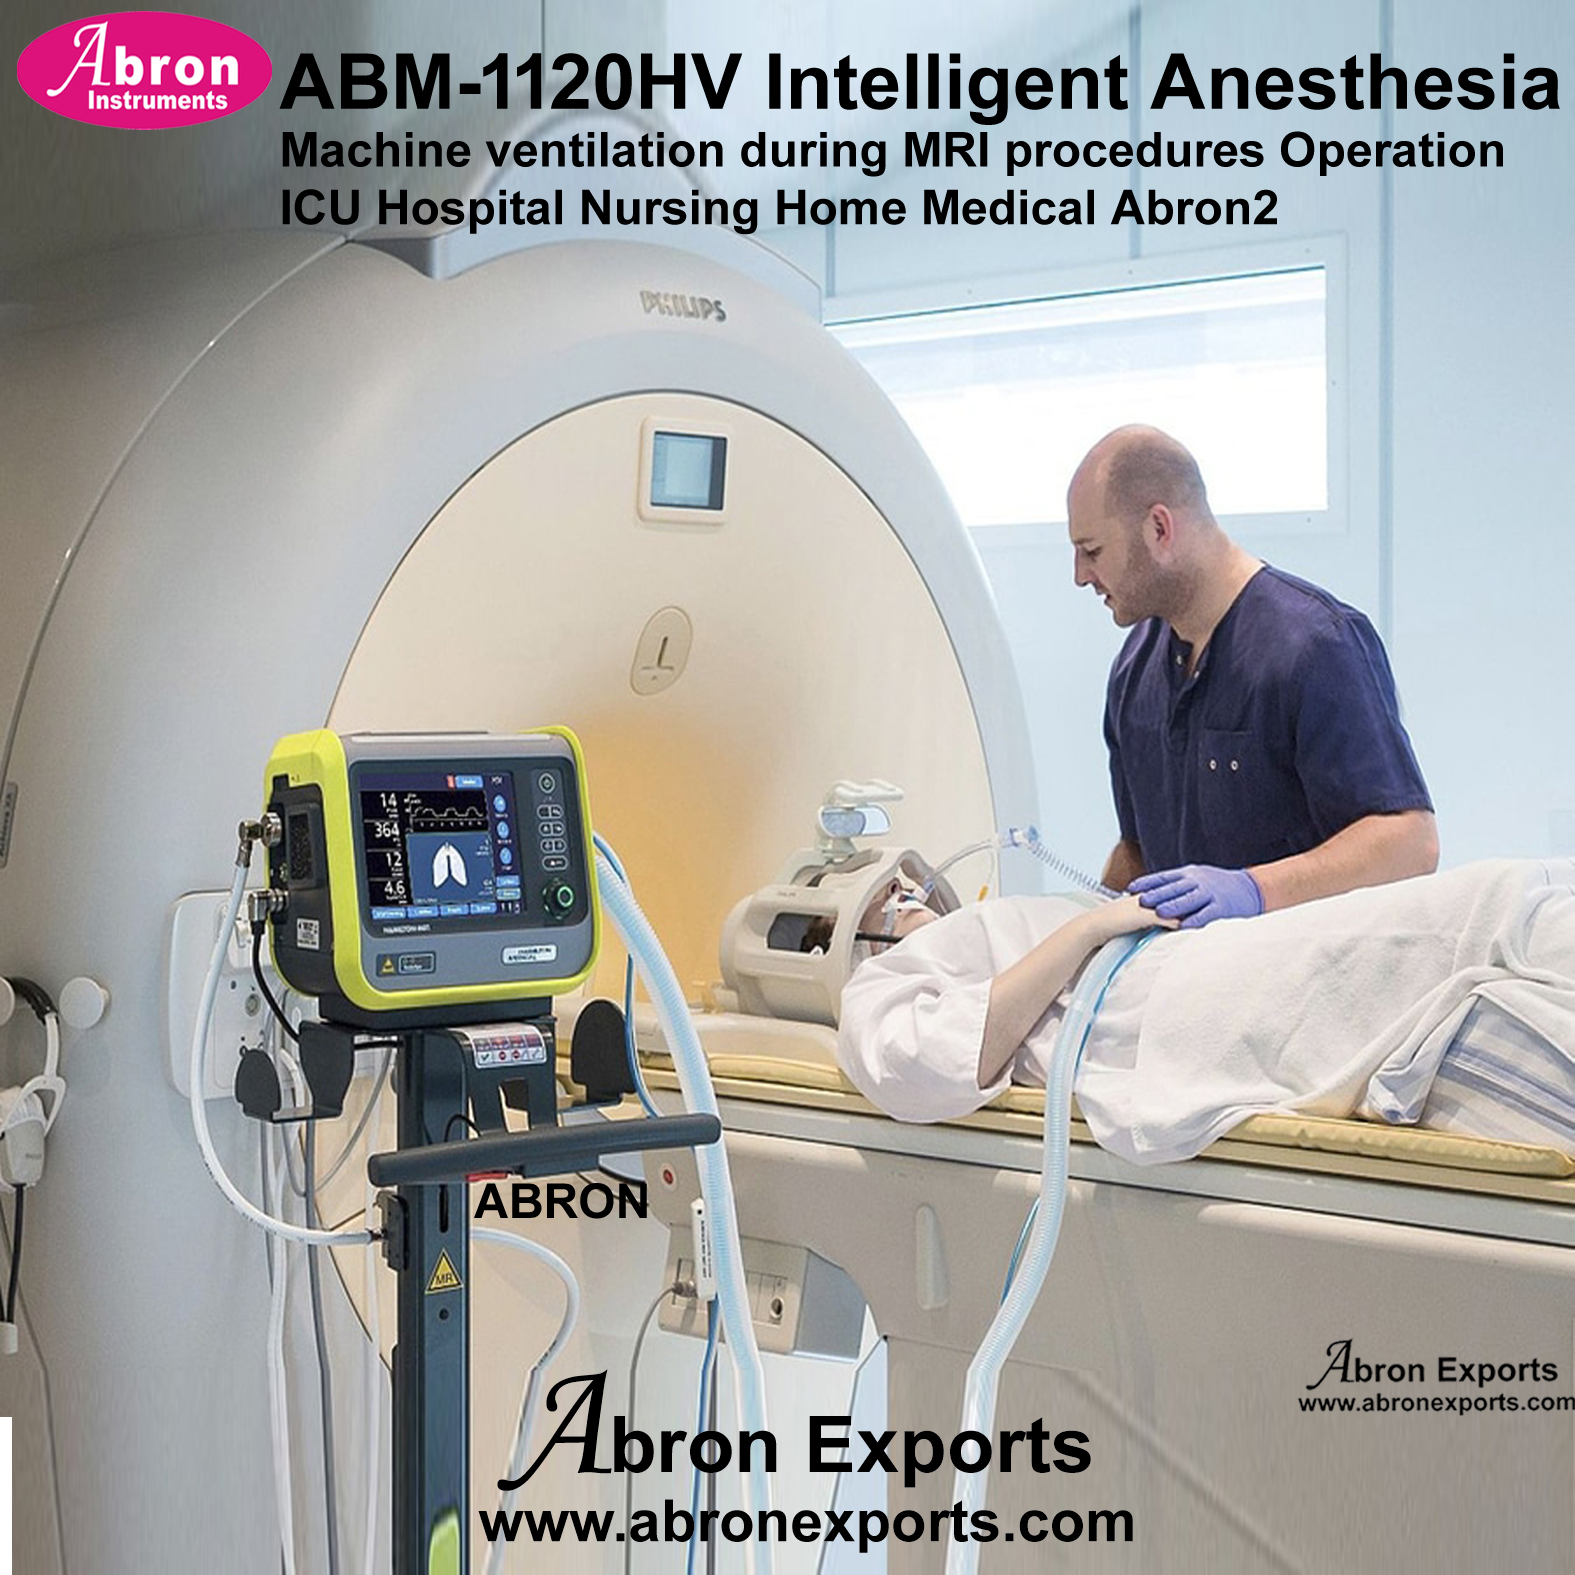 Intelligent Anesthesia Machine Ventilation During MRI Procedures Operation ICU Hospital Nursing Home Medical Abron ABM-1120HV